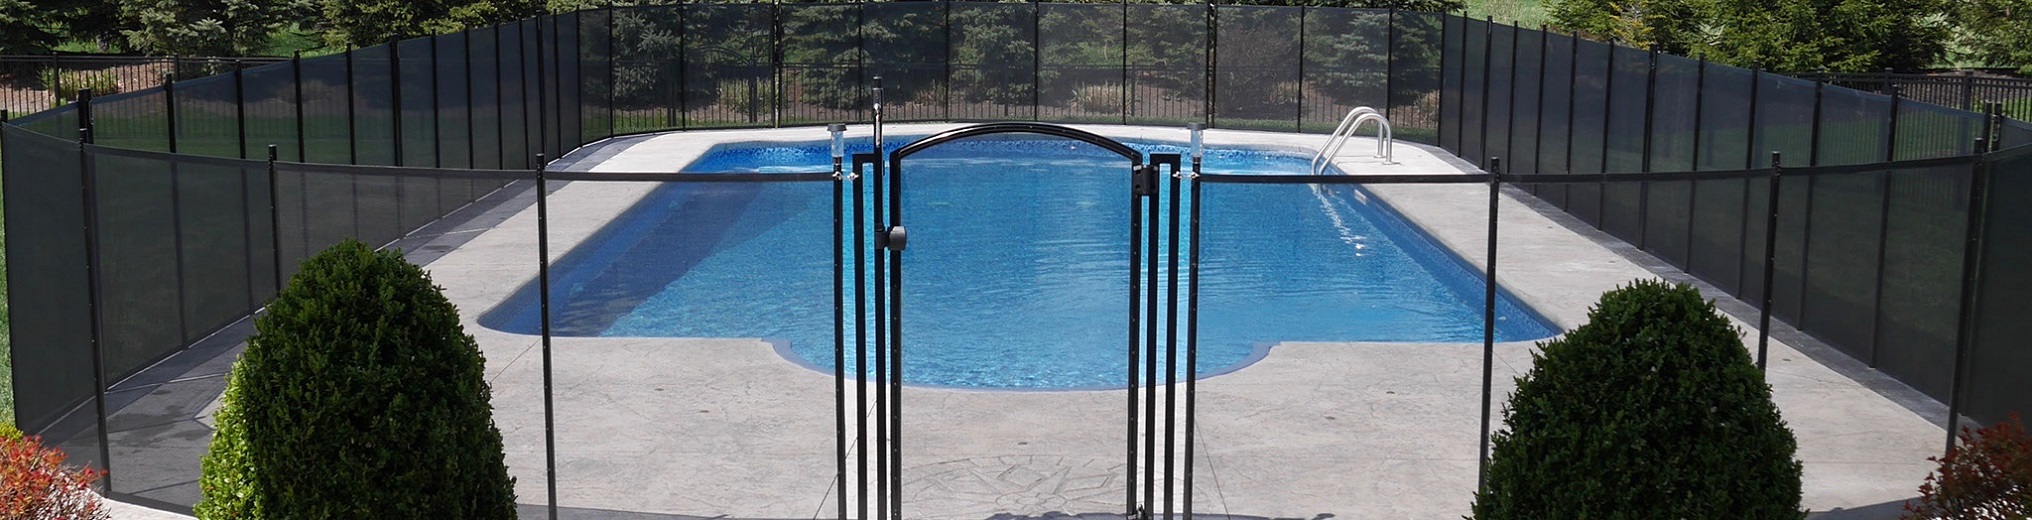 pool fence installations Oklahoma City